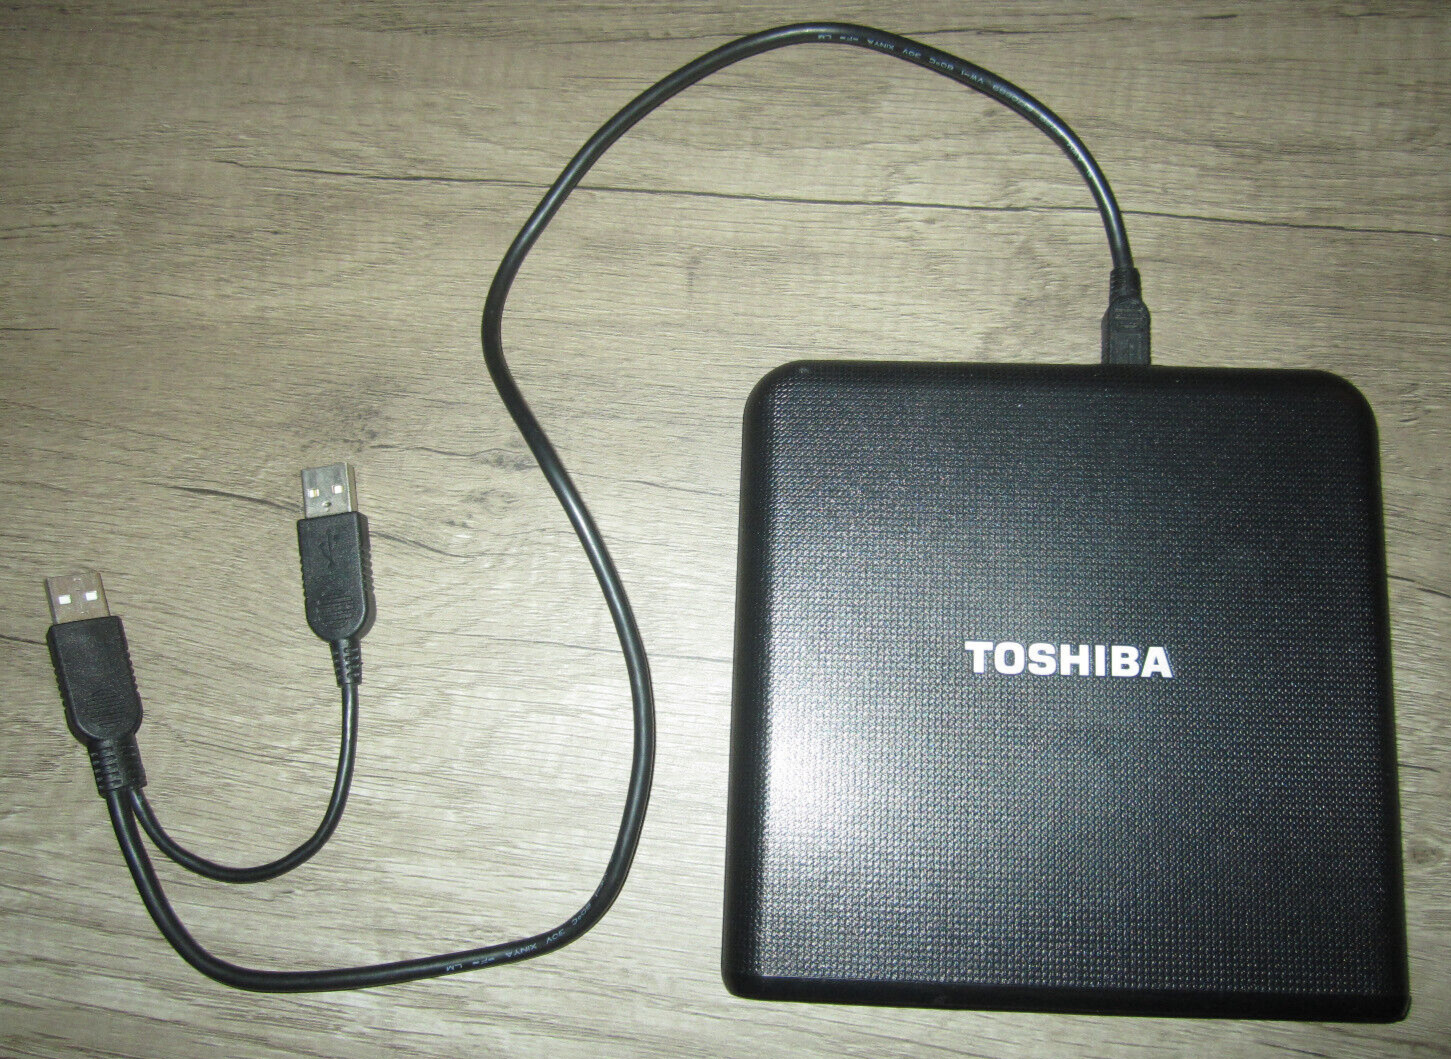 Toshiba Portable SuperMulti Drive, Model No. PA3834U-1DV2    CD or DVD drive